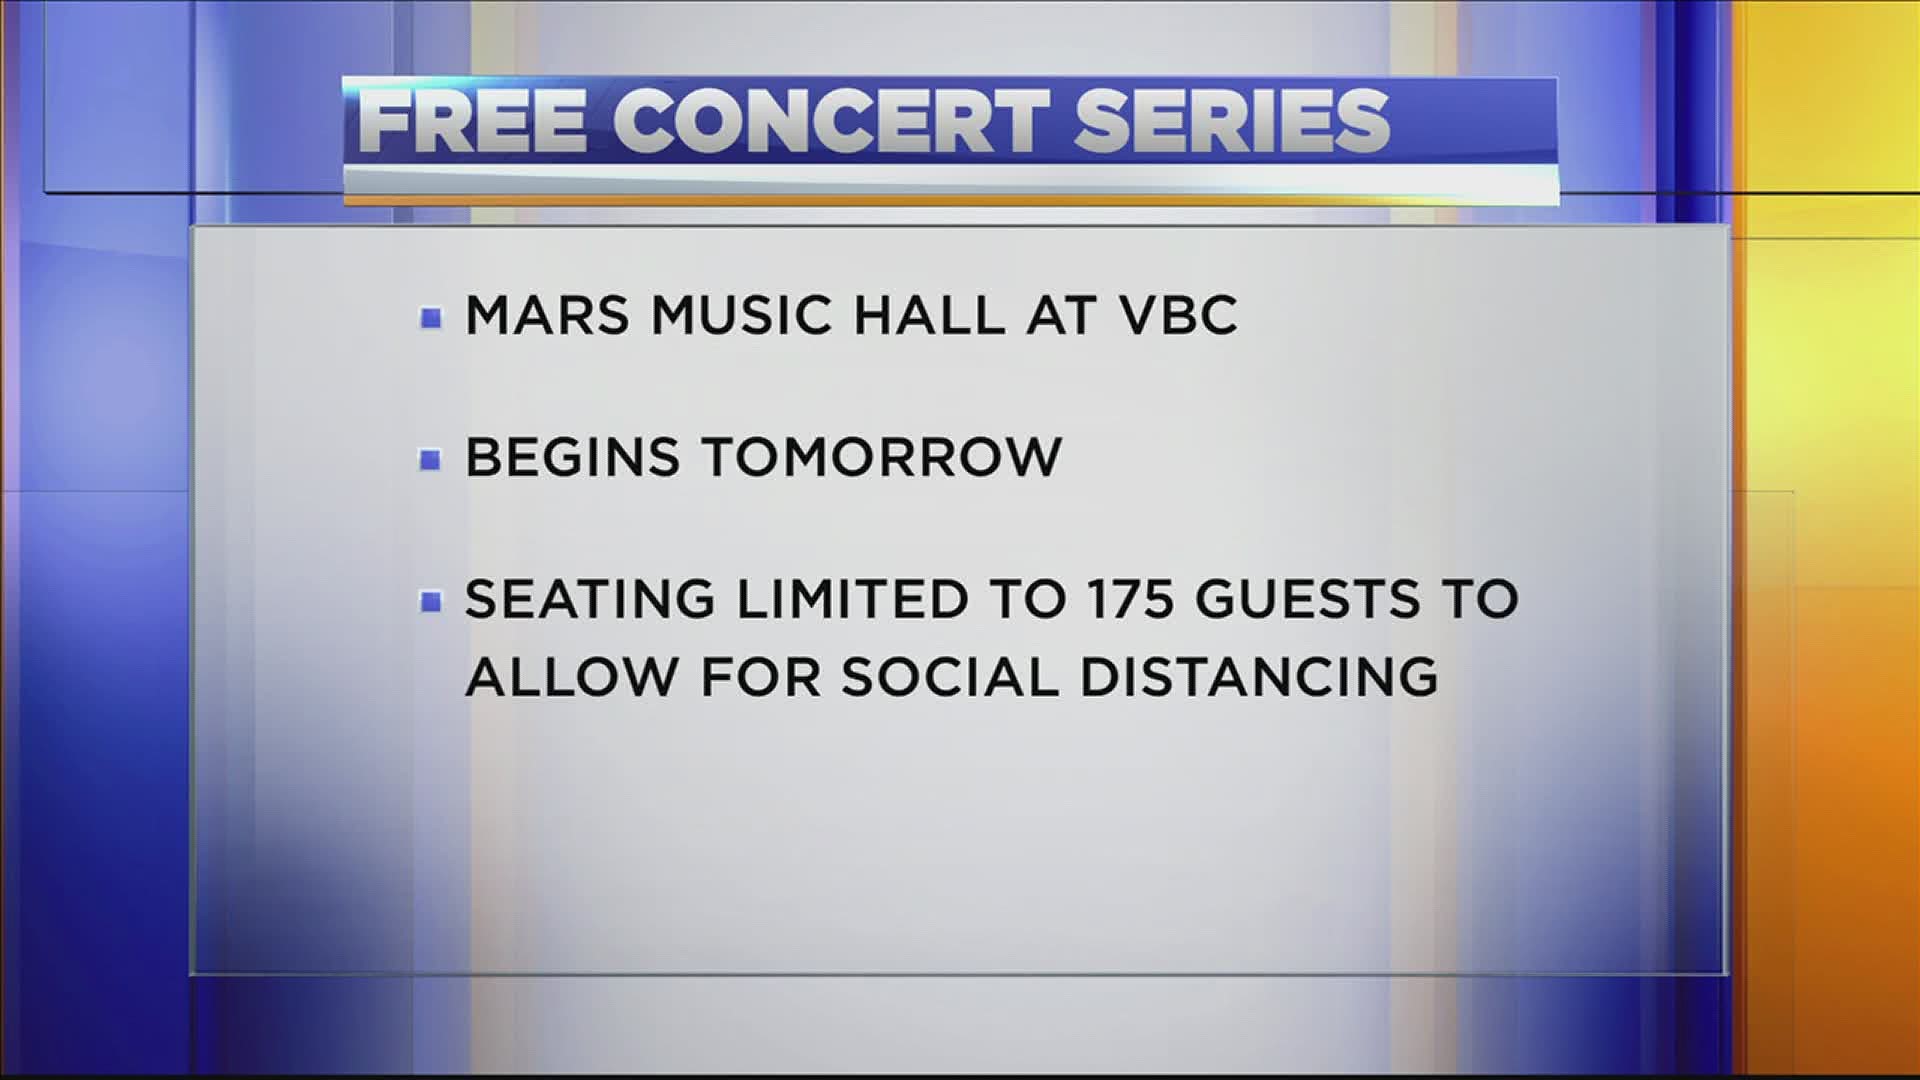 The Mars Music Hall opens its doors starting next week.